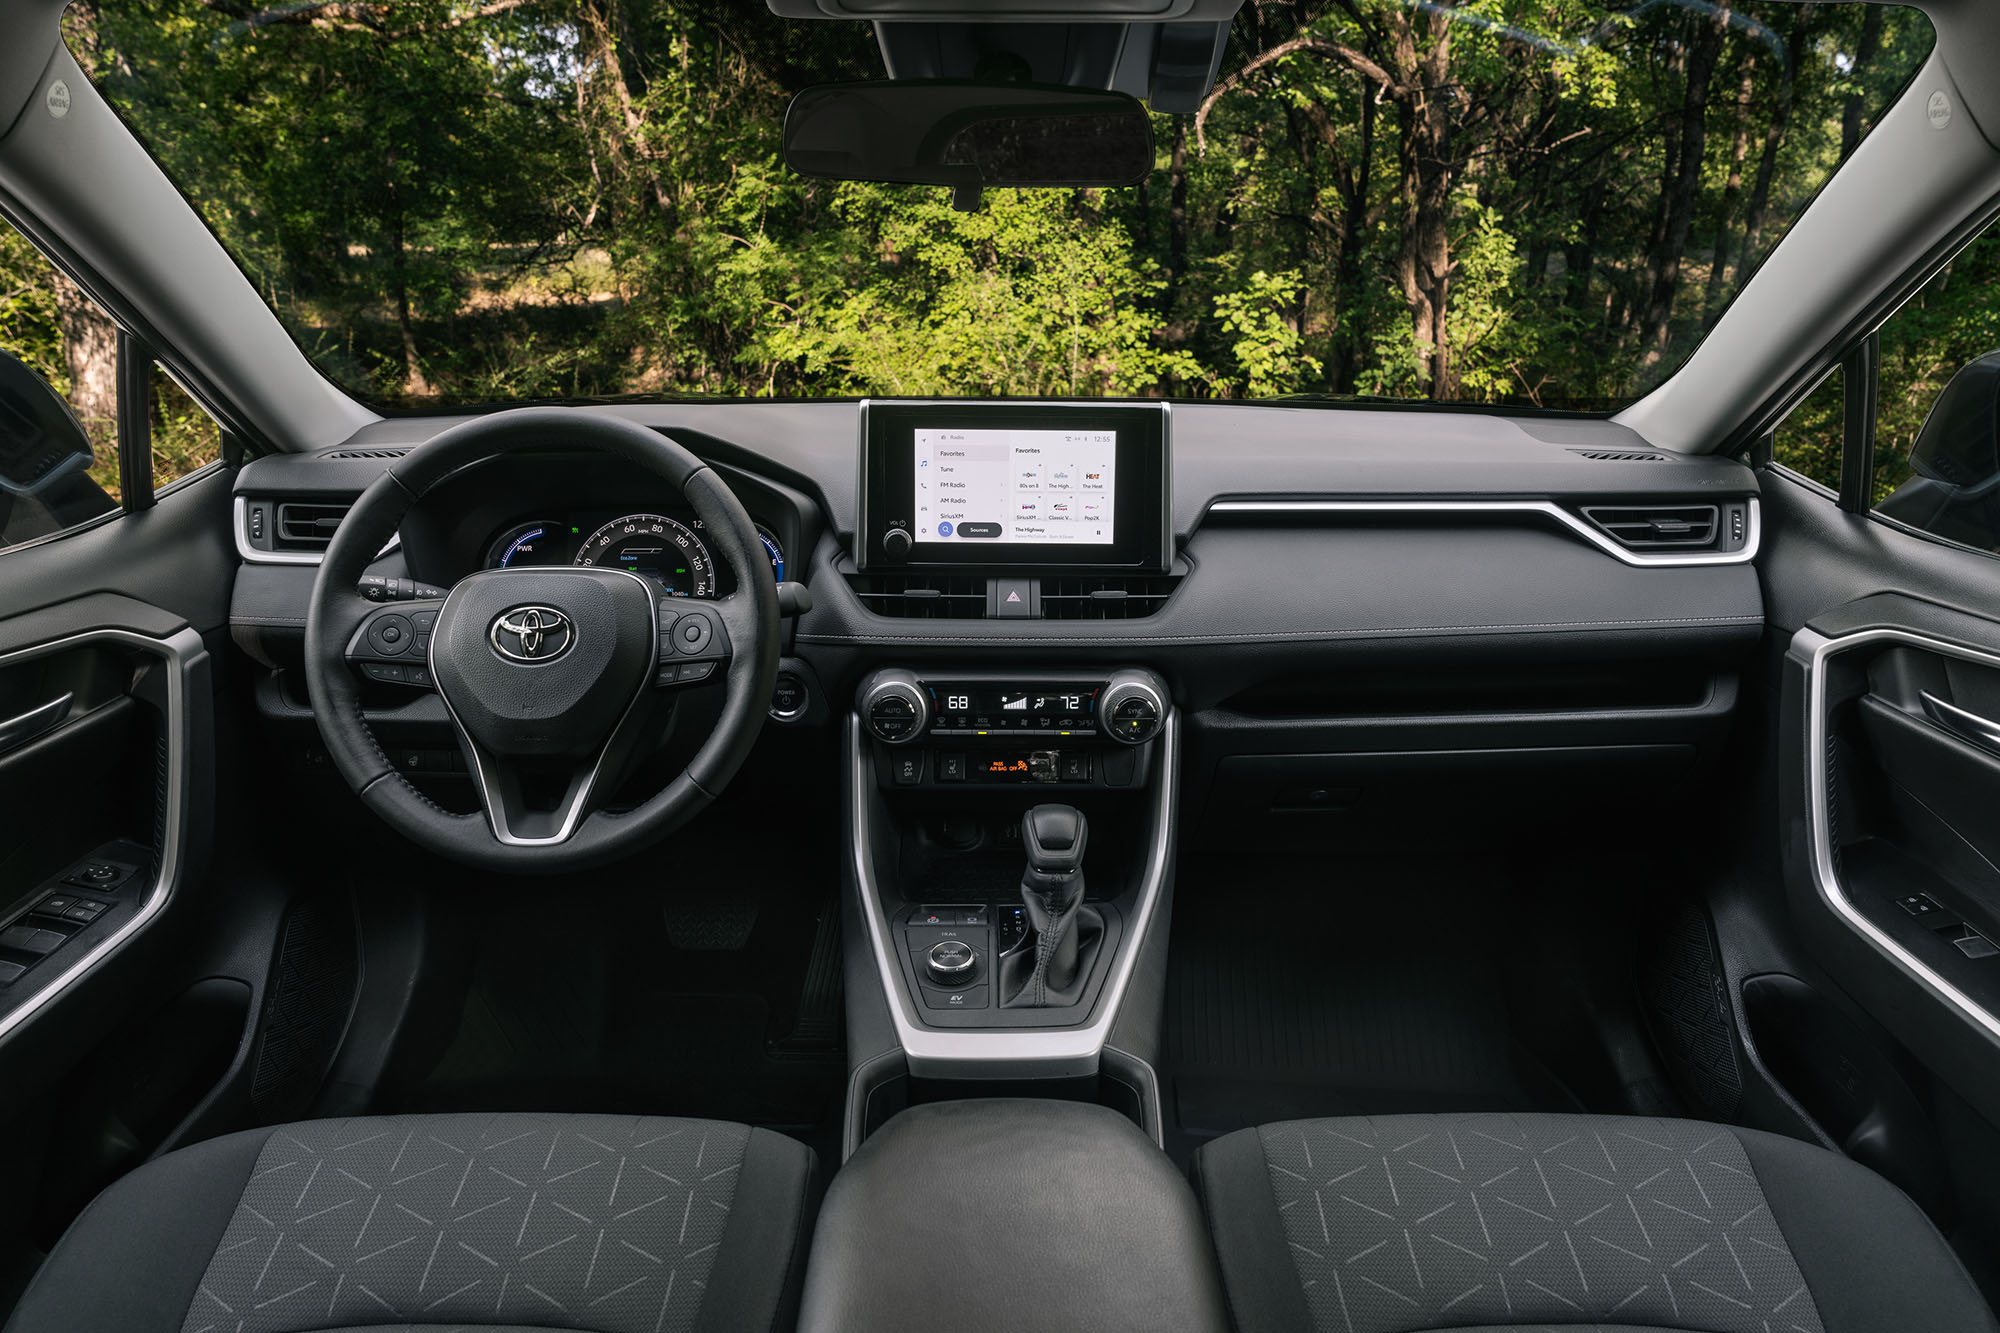 Toyota RAV4 interior in black